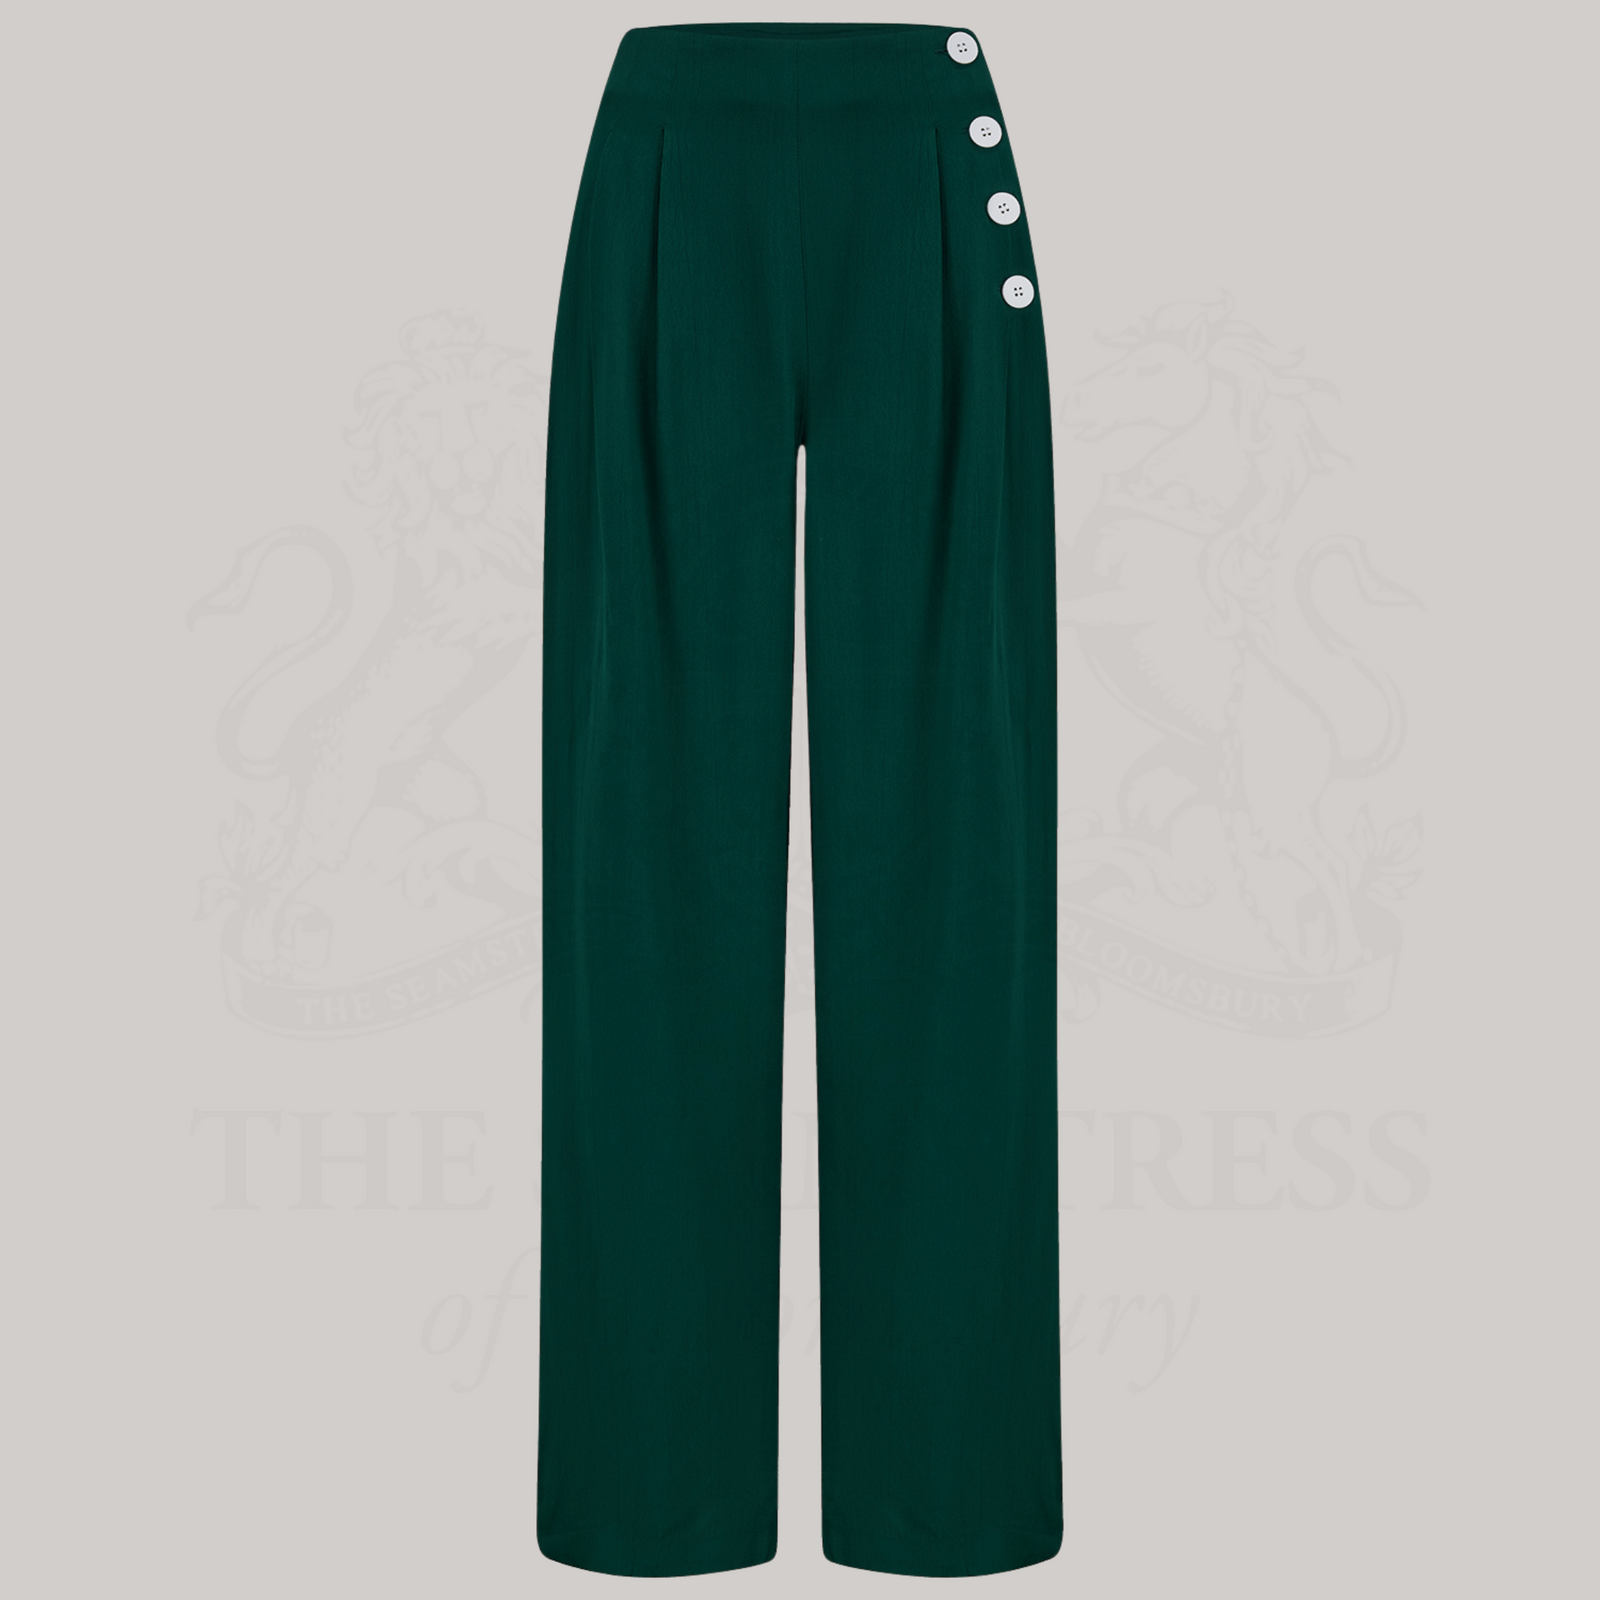 Ladies 1940s Vintage Style Trousers - The Seamstress of Bloomsbury